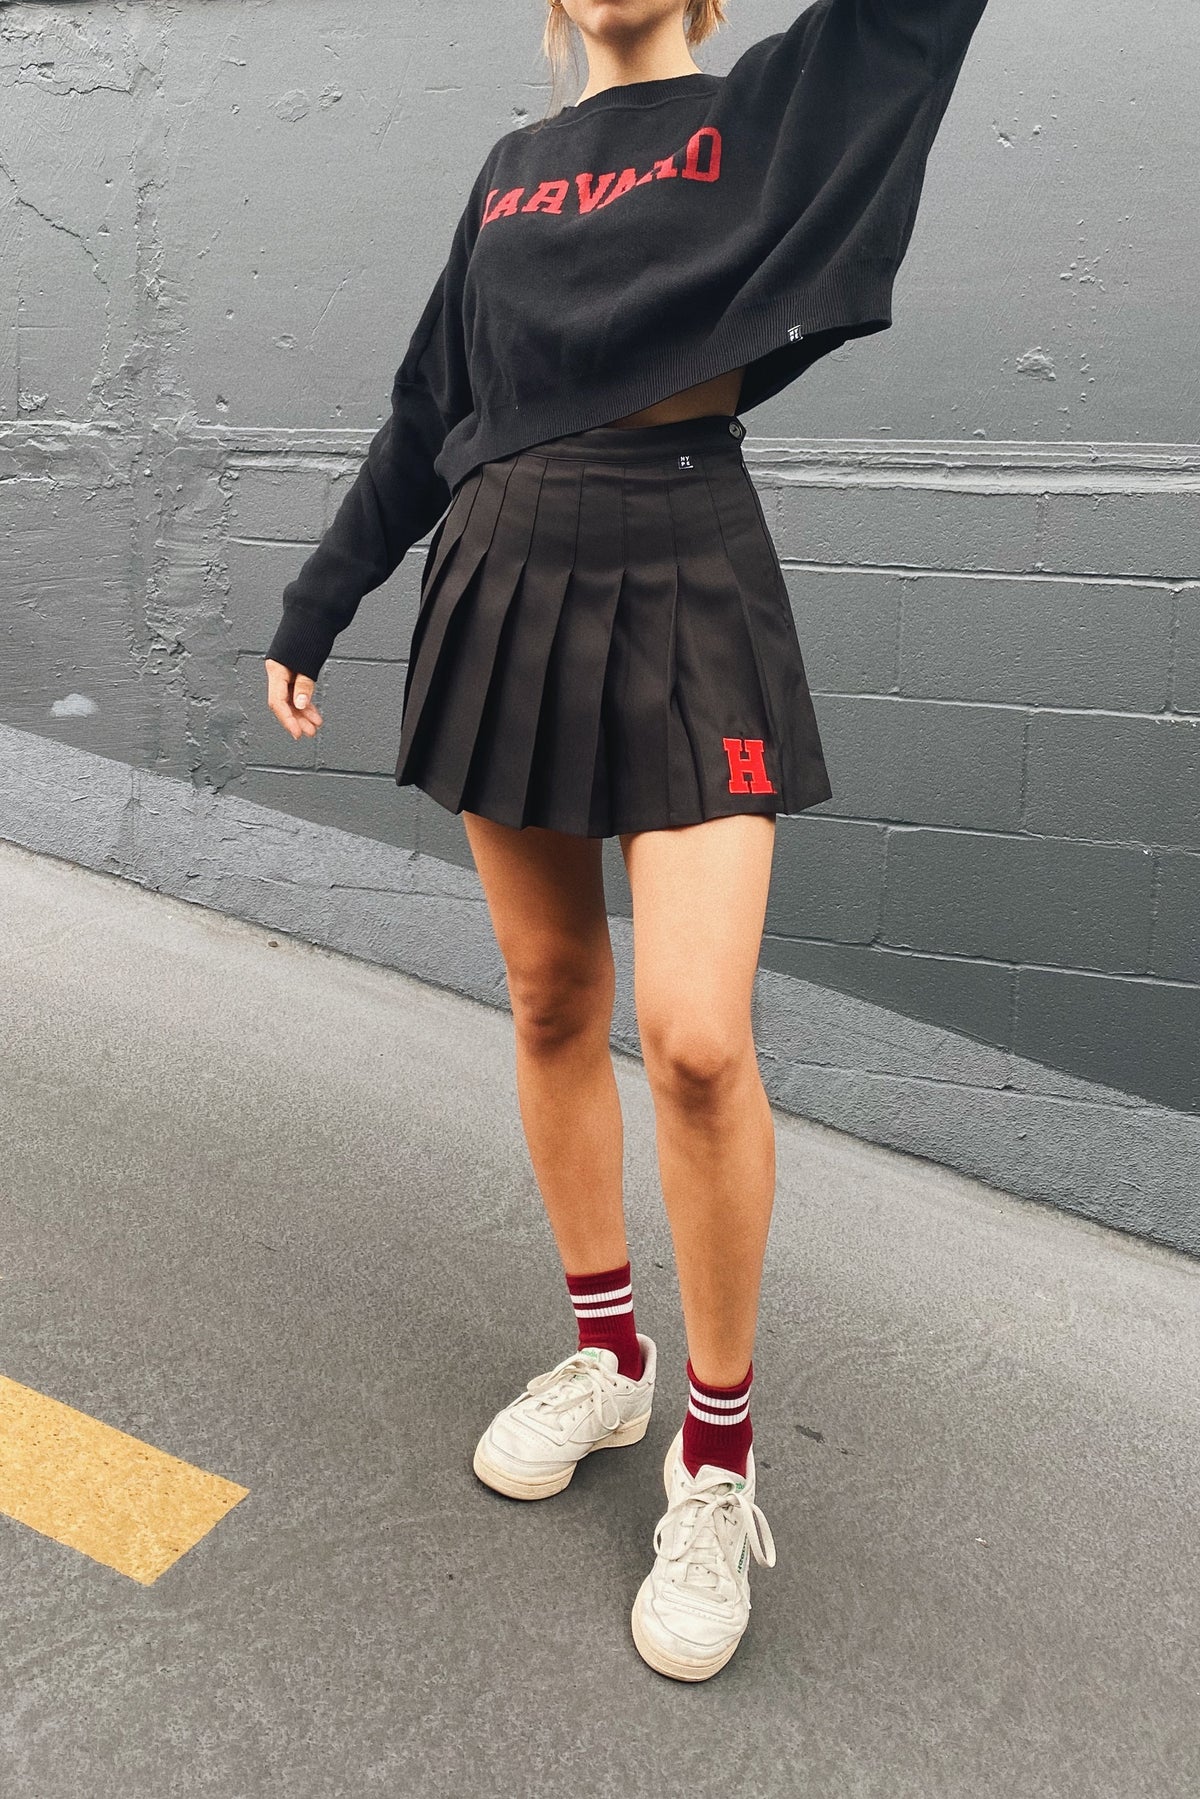 Harvard Tennis Skirt